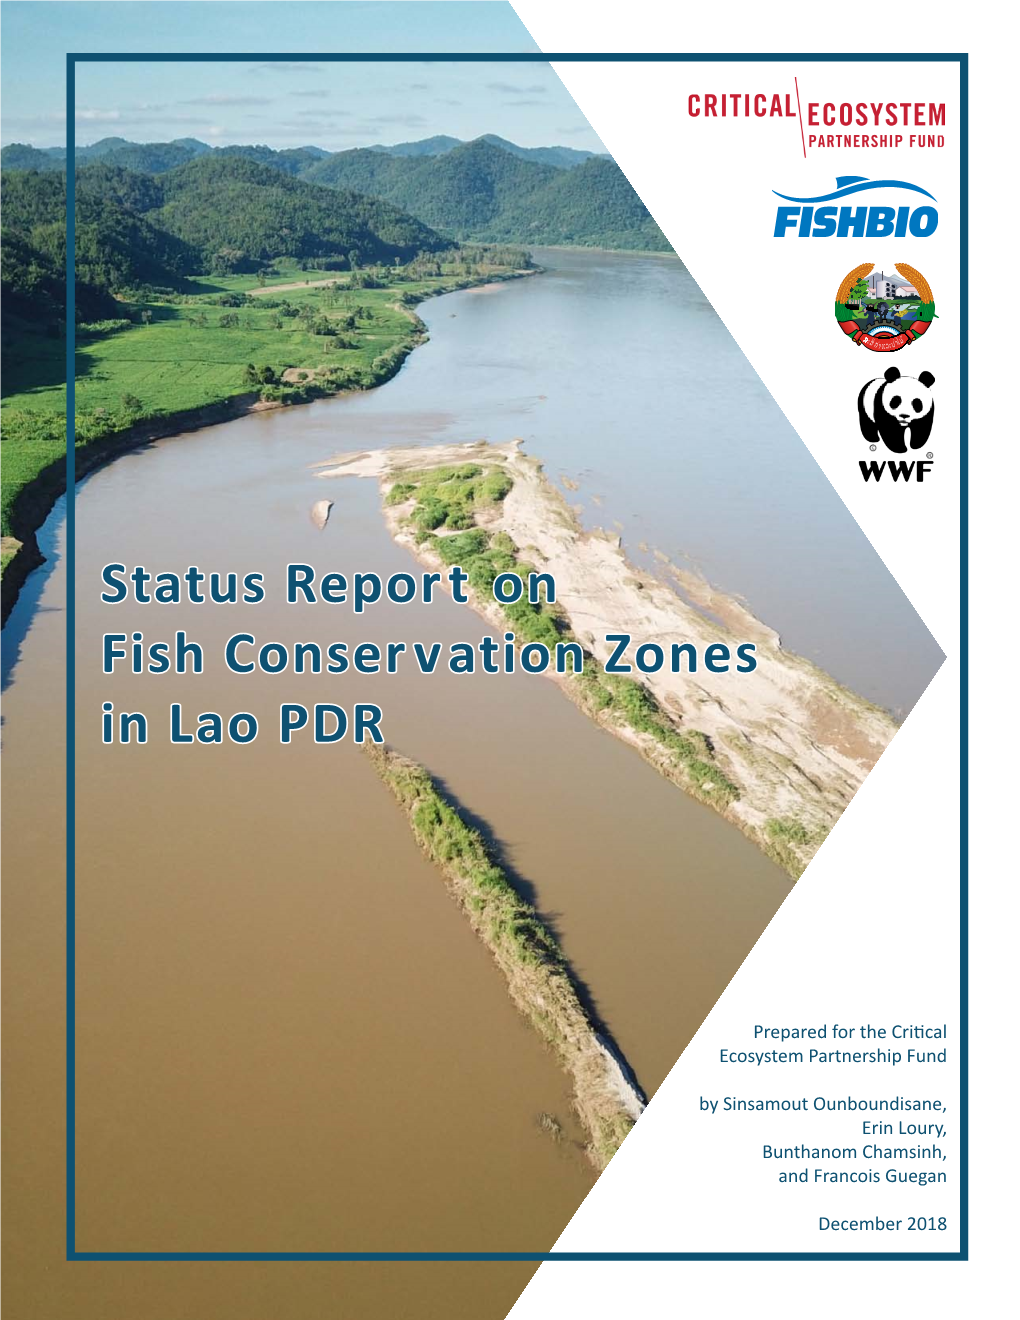 Status Report on Fczs in Lao